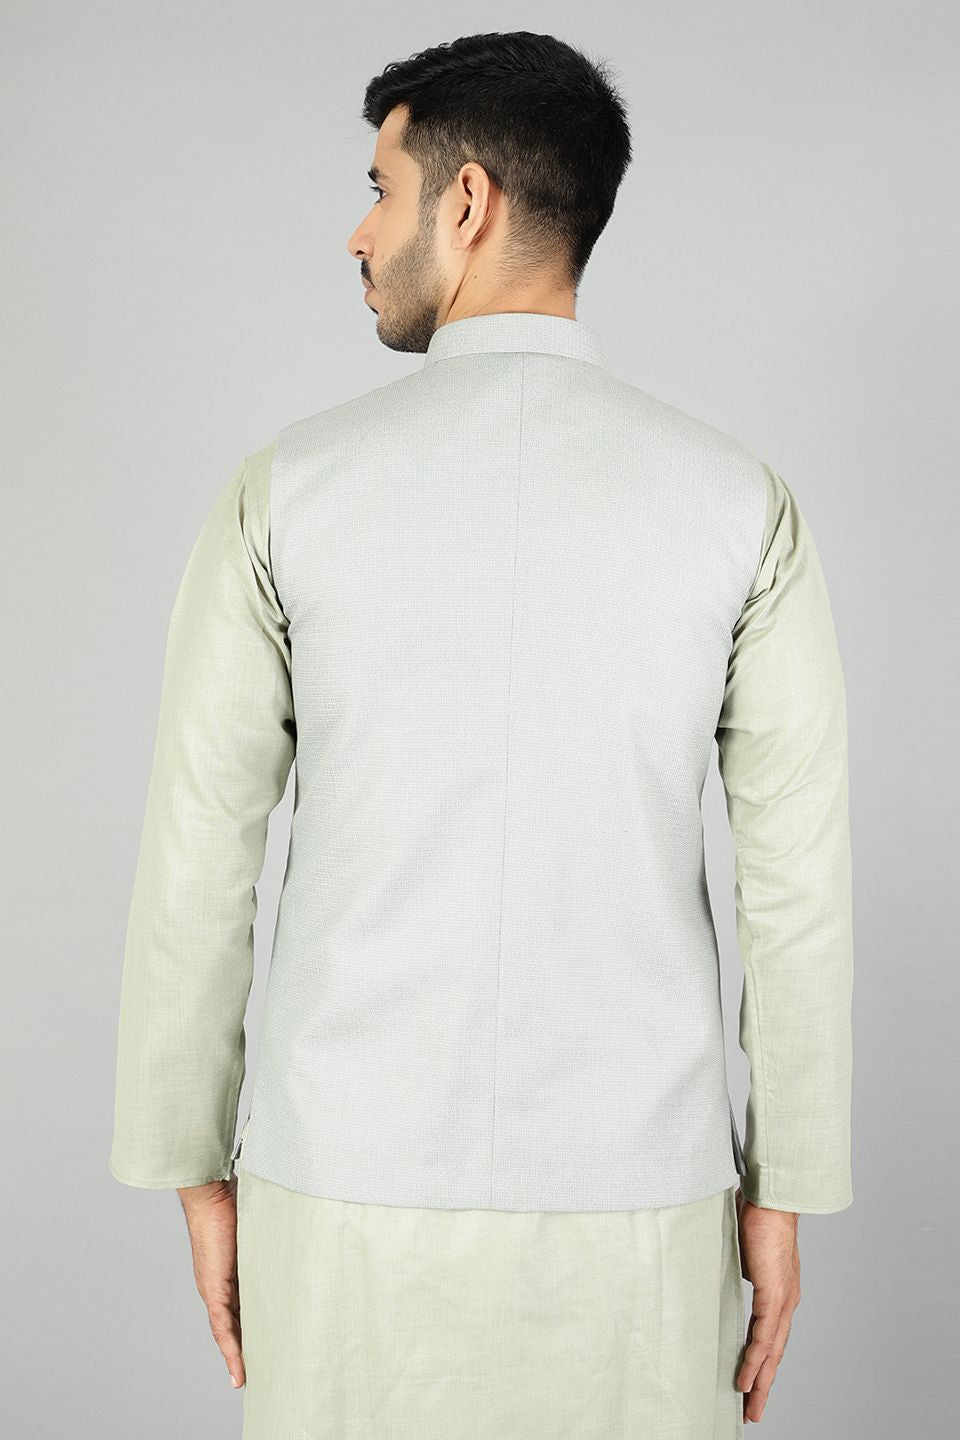 Polyester Cotton Plain Grey Modi Nehru Jacket